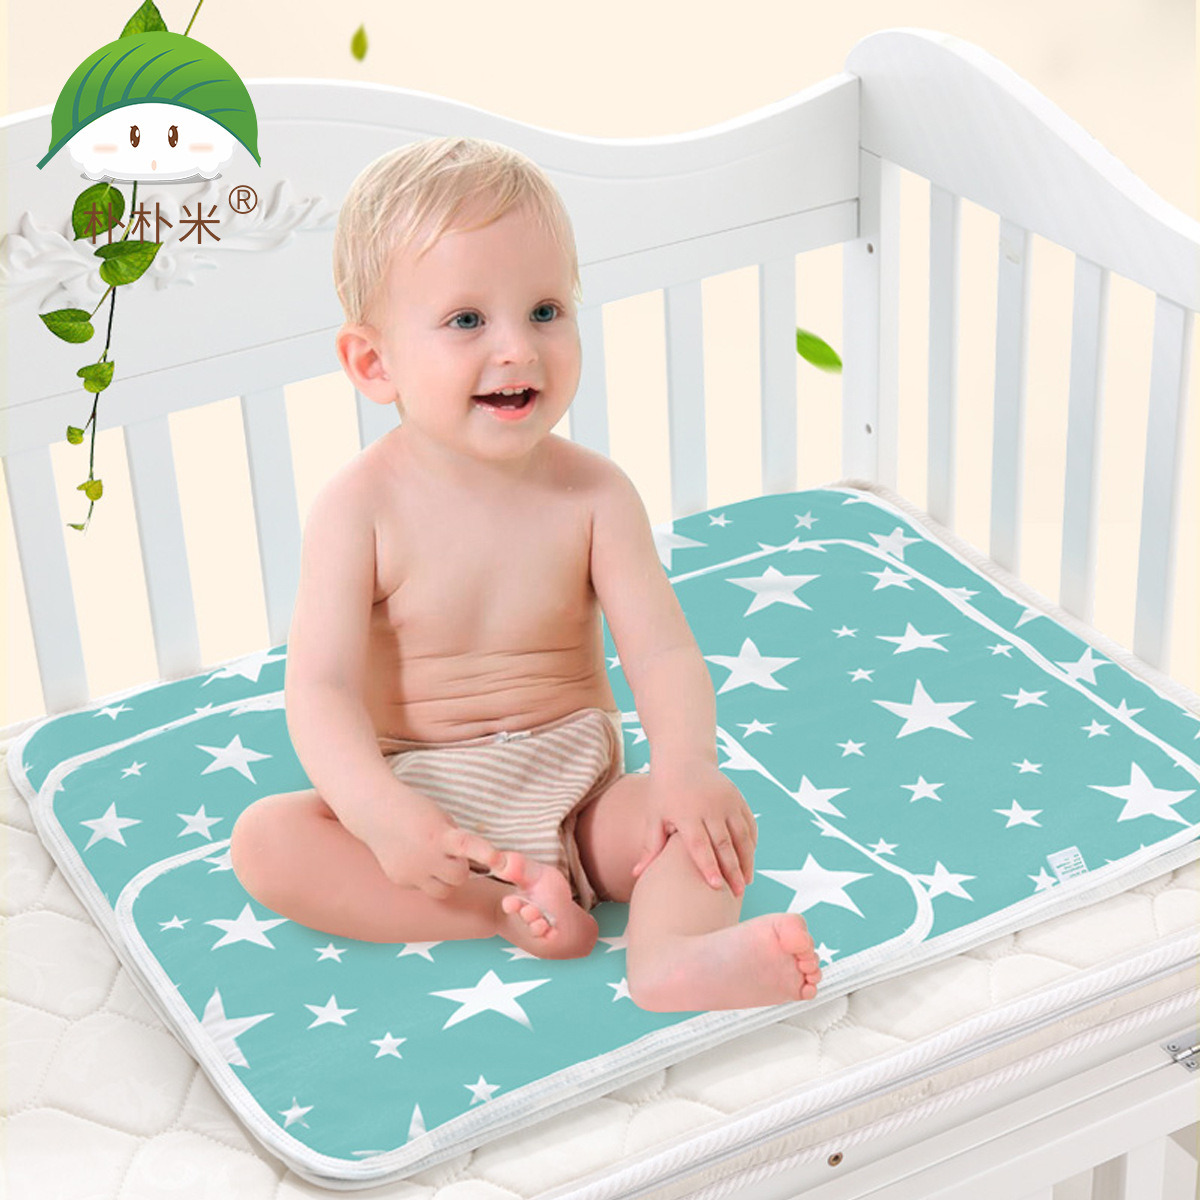 Pu Pu Mi New Baby Breathable Baby Wet Proof Pad Cotton Cartoon Waterproof Adult Sanitary Napkin 50*70